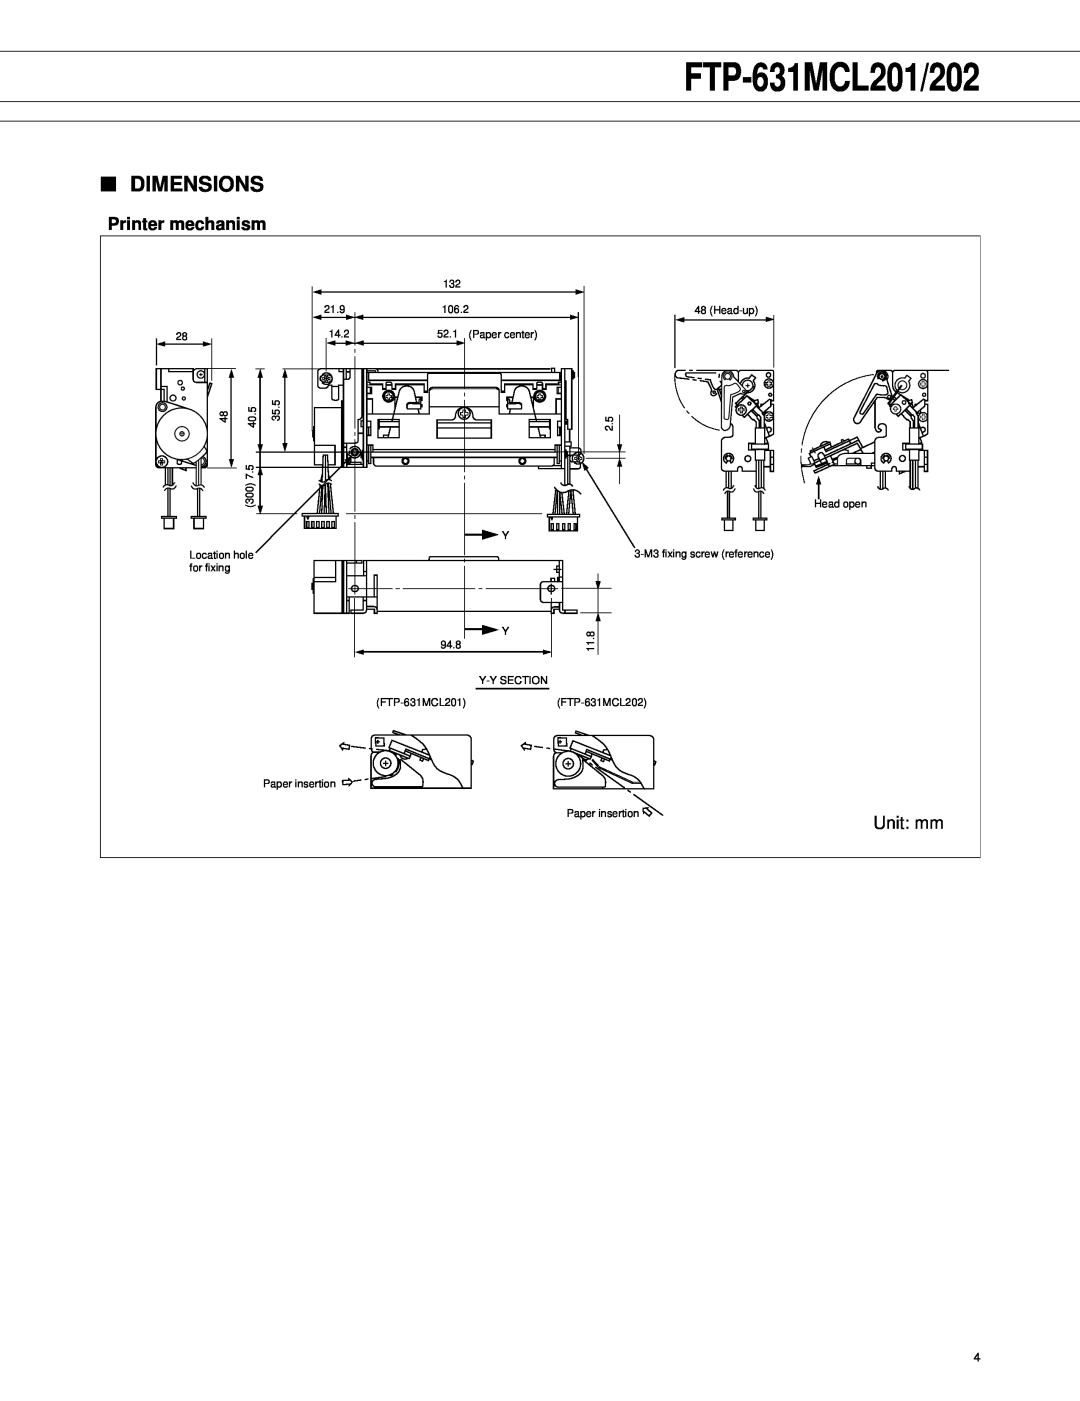 Fujitsu FTP-631MCL202 manual Dimensions, Printer mechanism, FTP-631MCL201/202 